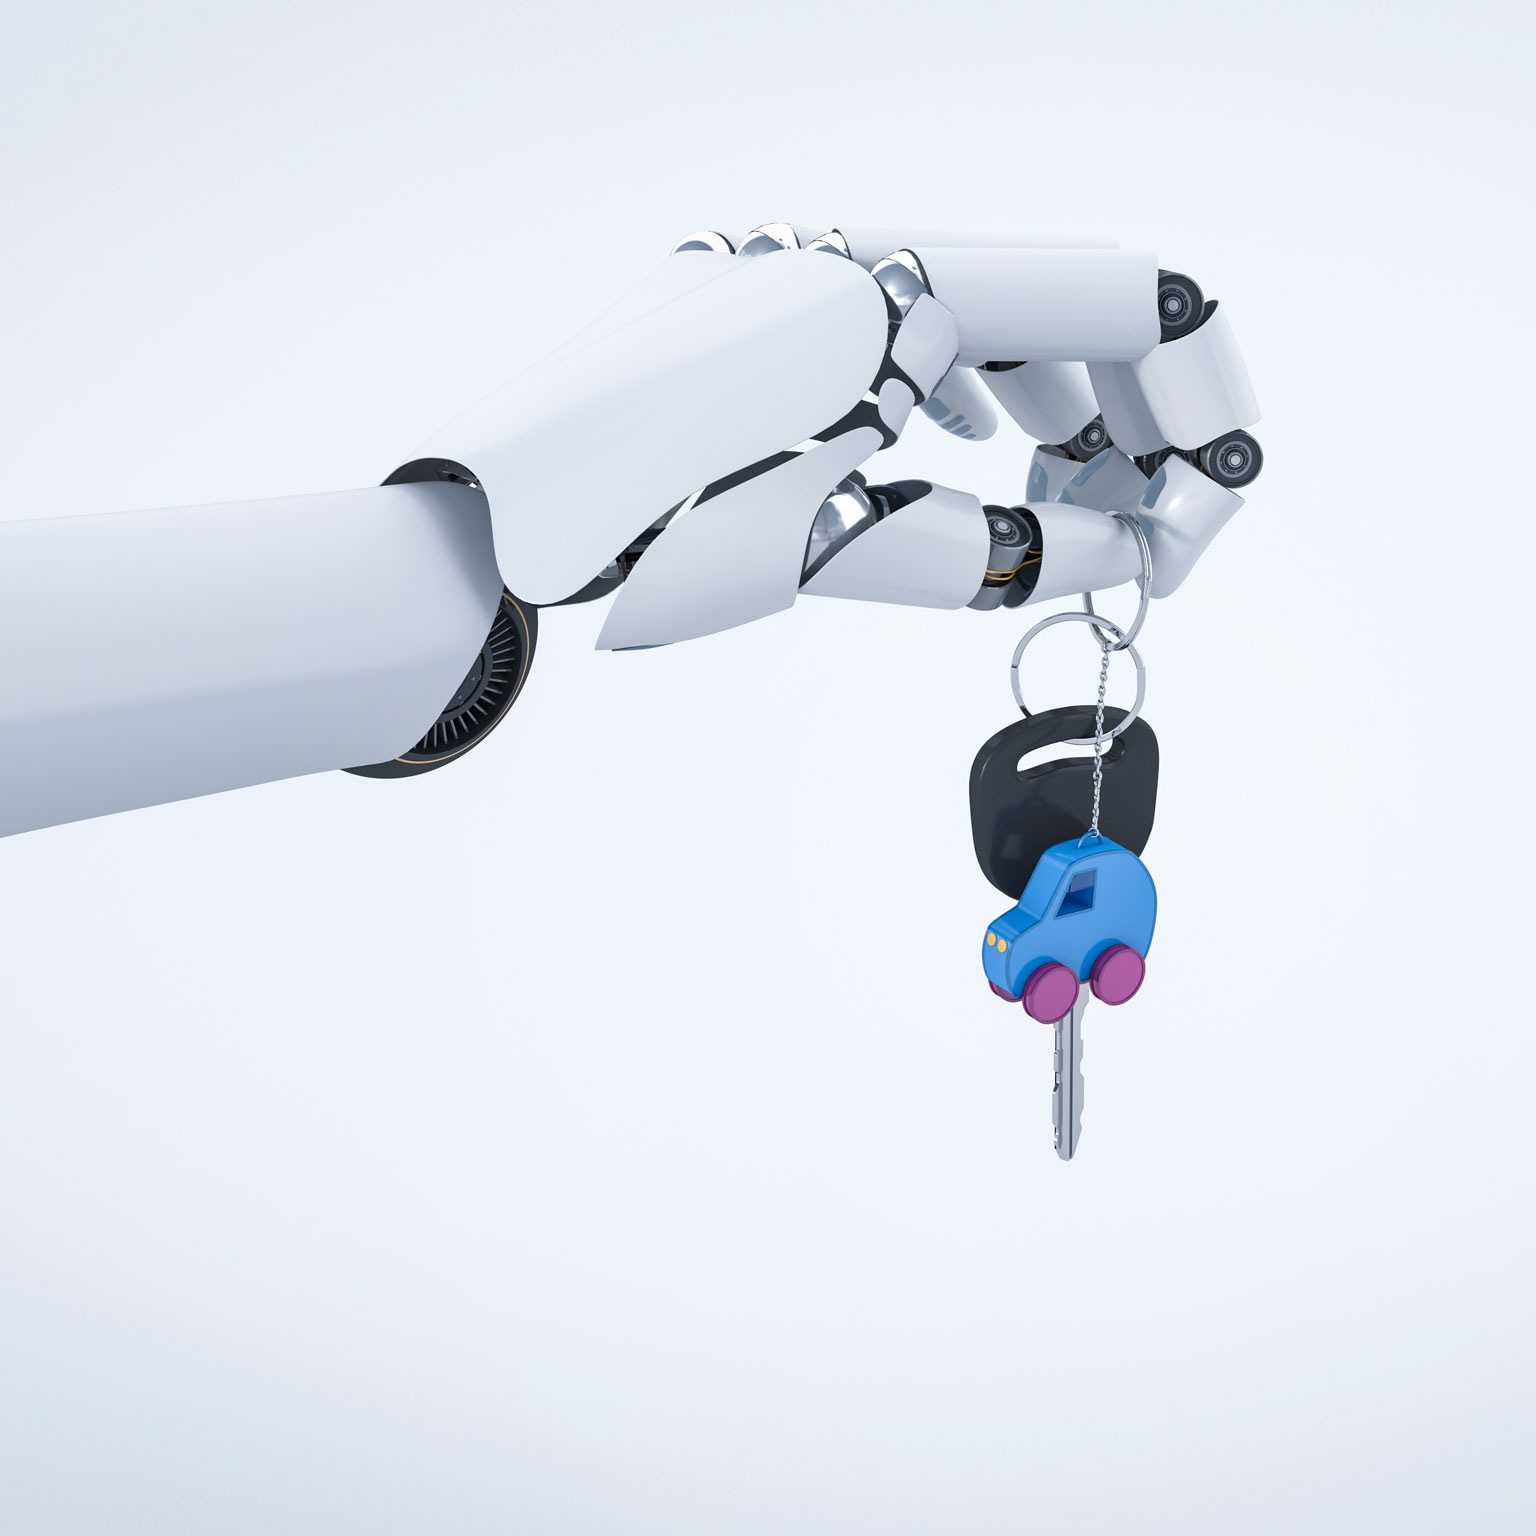 Idaho Car Dealerships Harness the Power of AI Virtual Assistants thumbnail